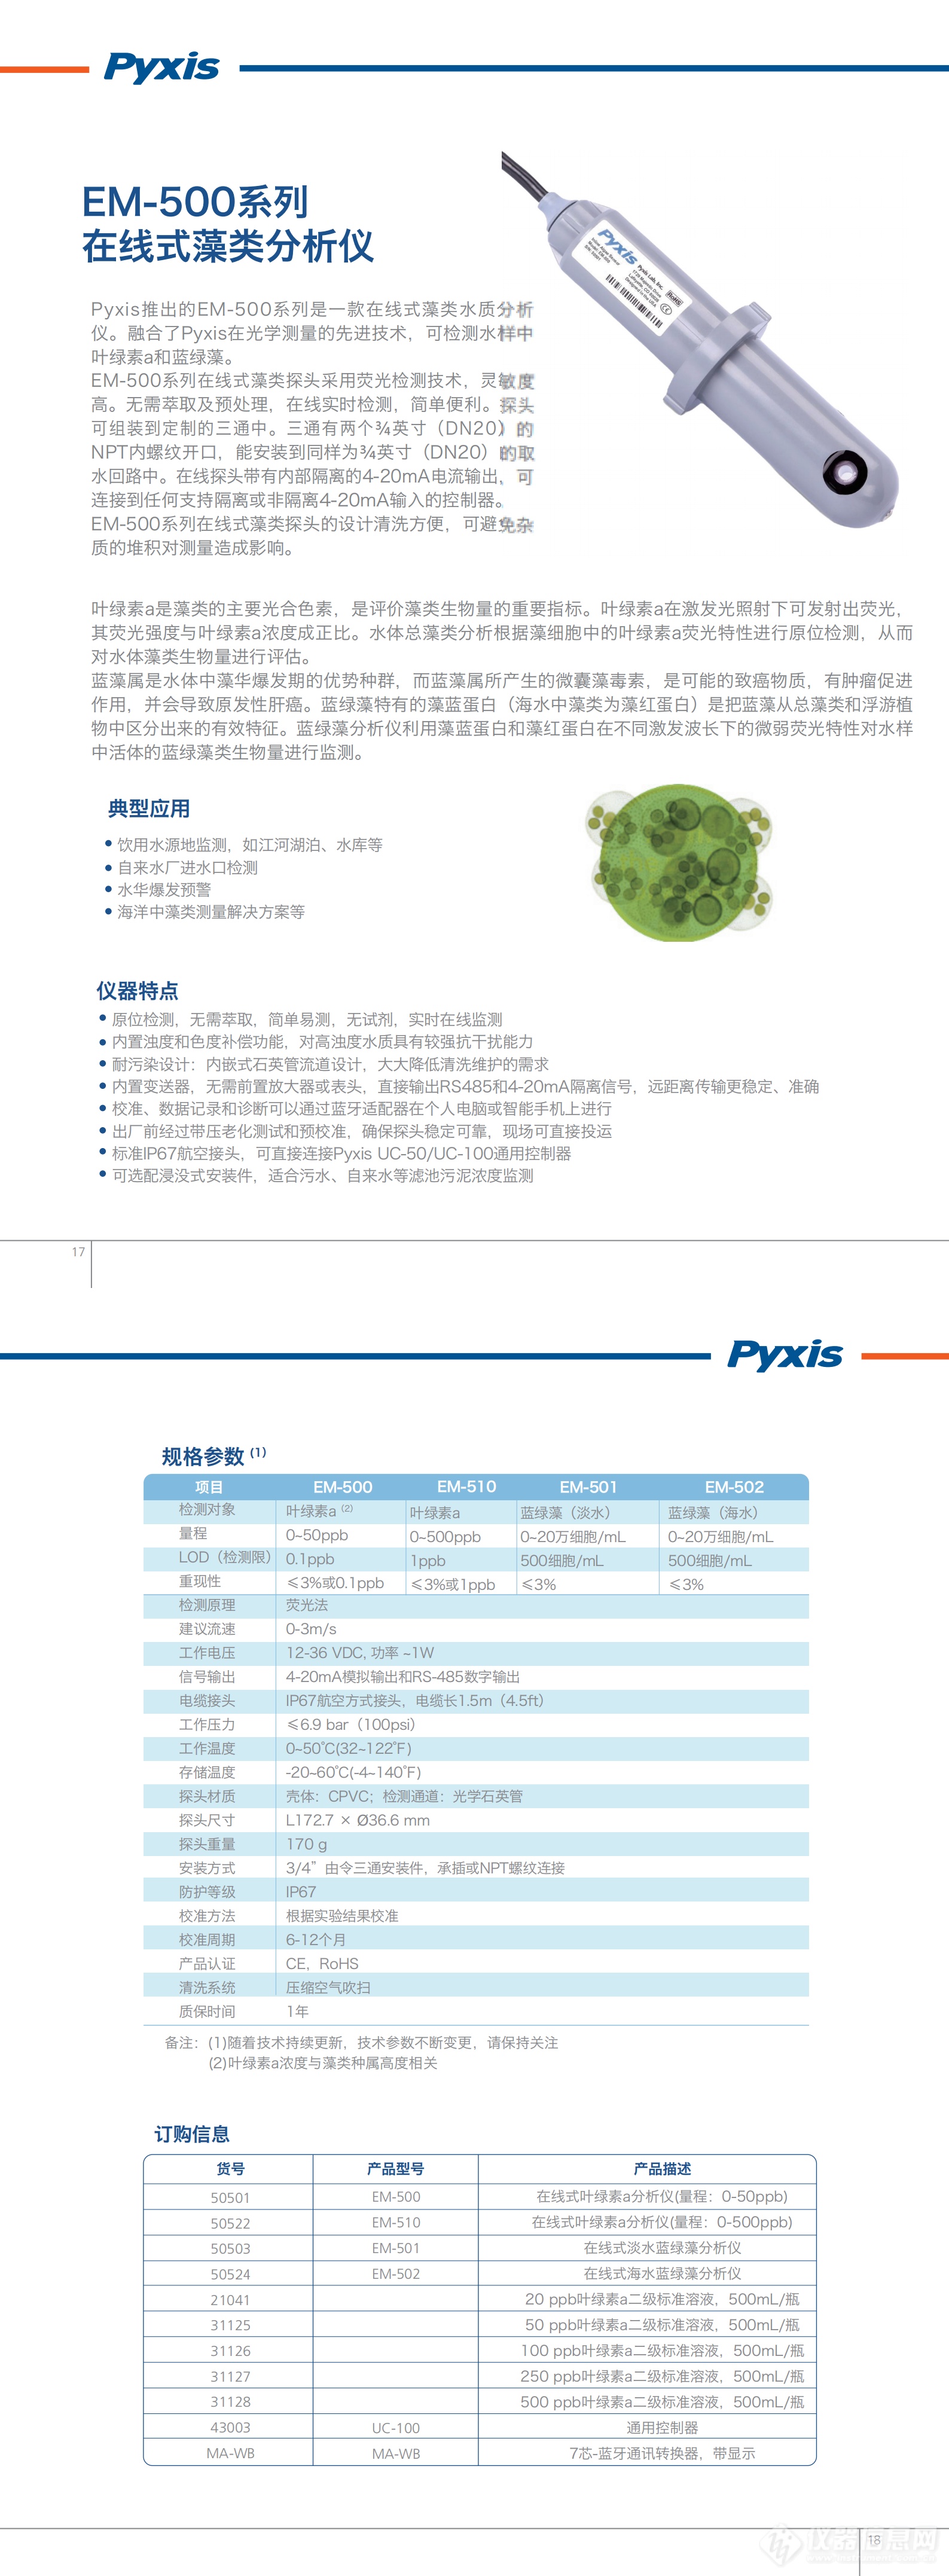 EM-500系列在线式藻类分析仪_00.png